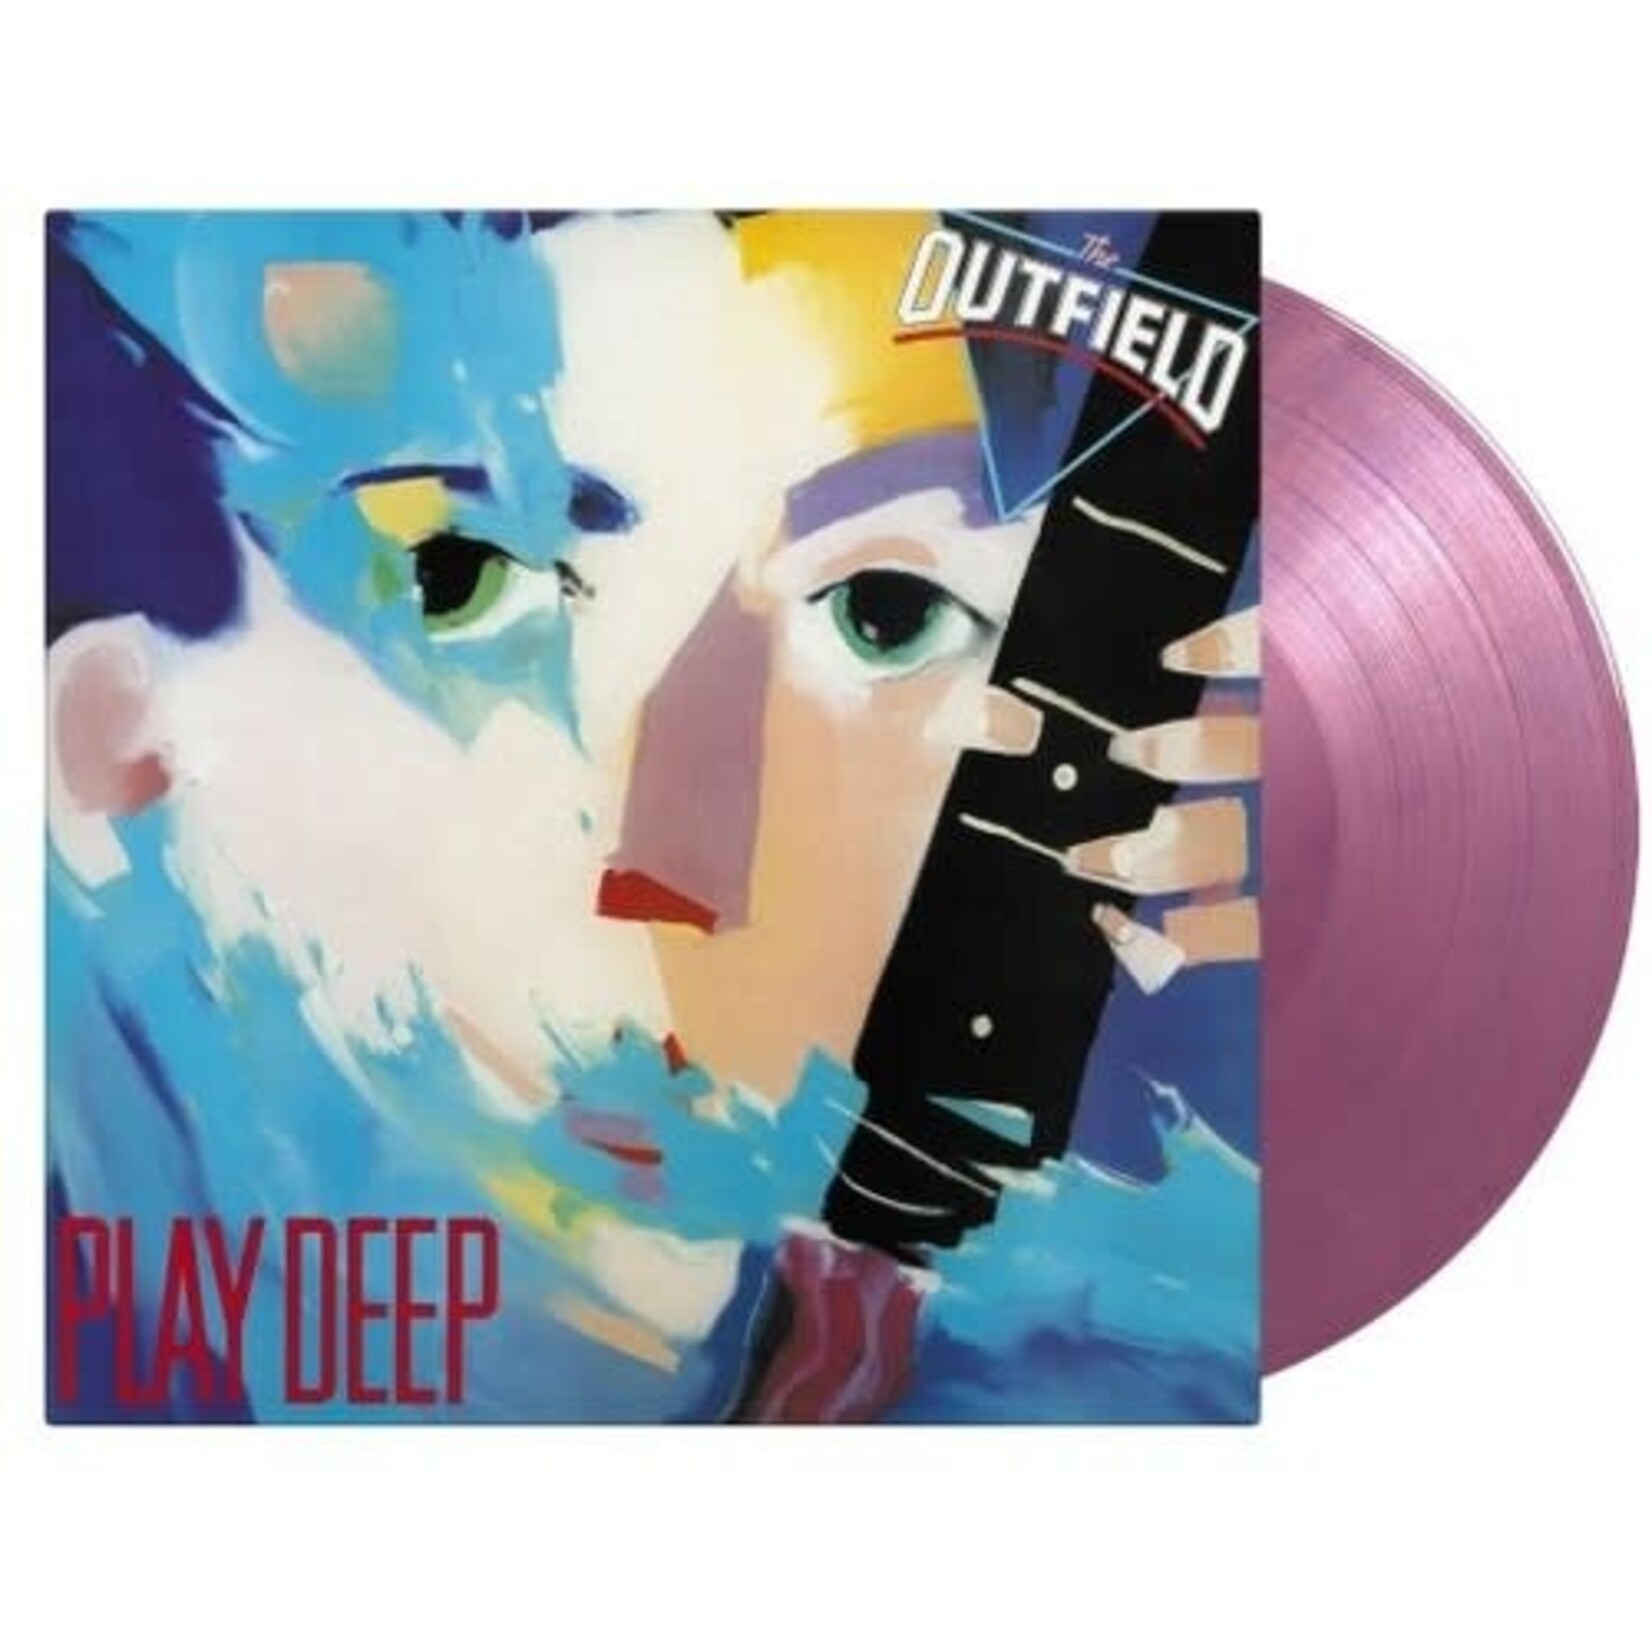 [New] Outfield - Play Deep (180g, purple vinyl)